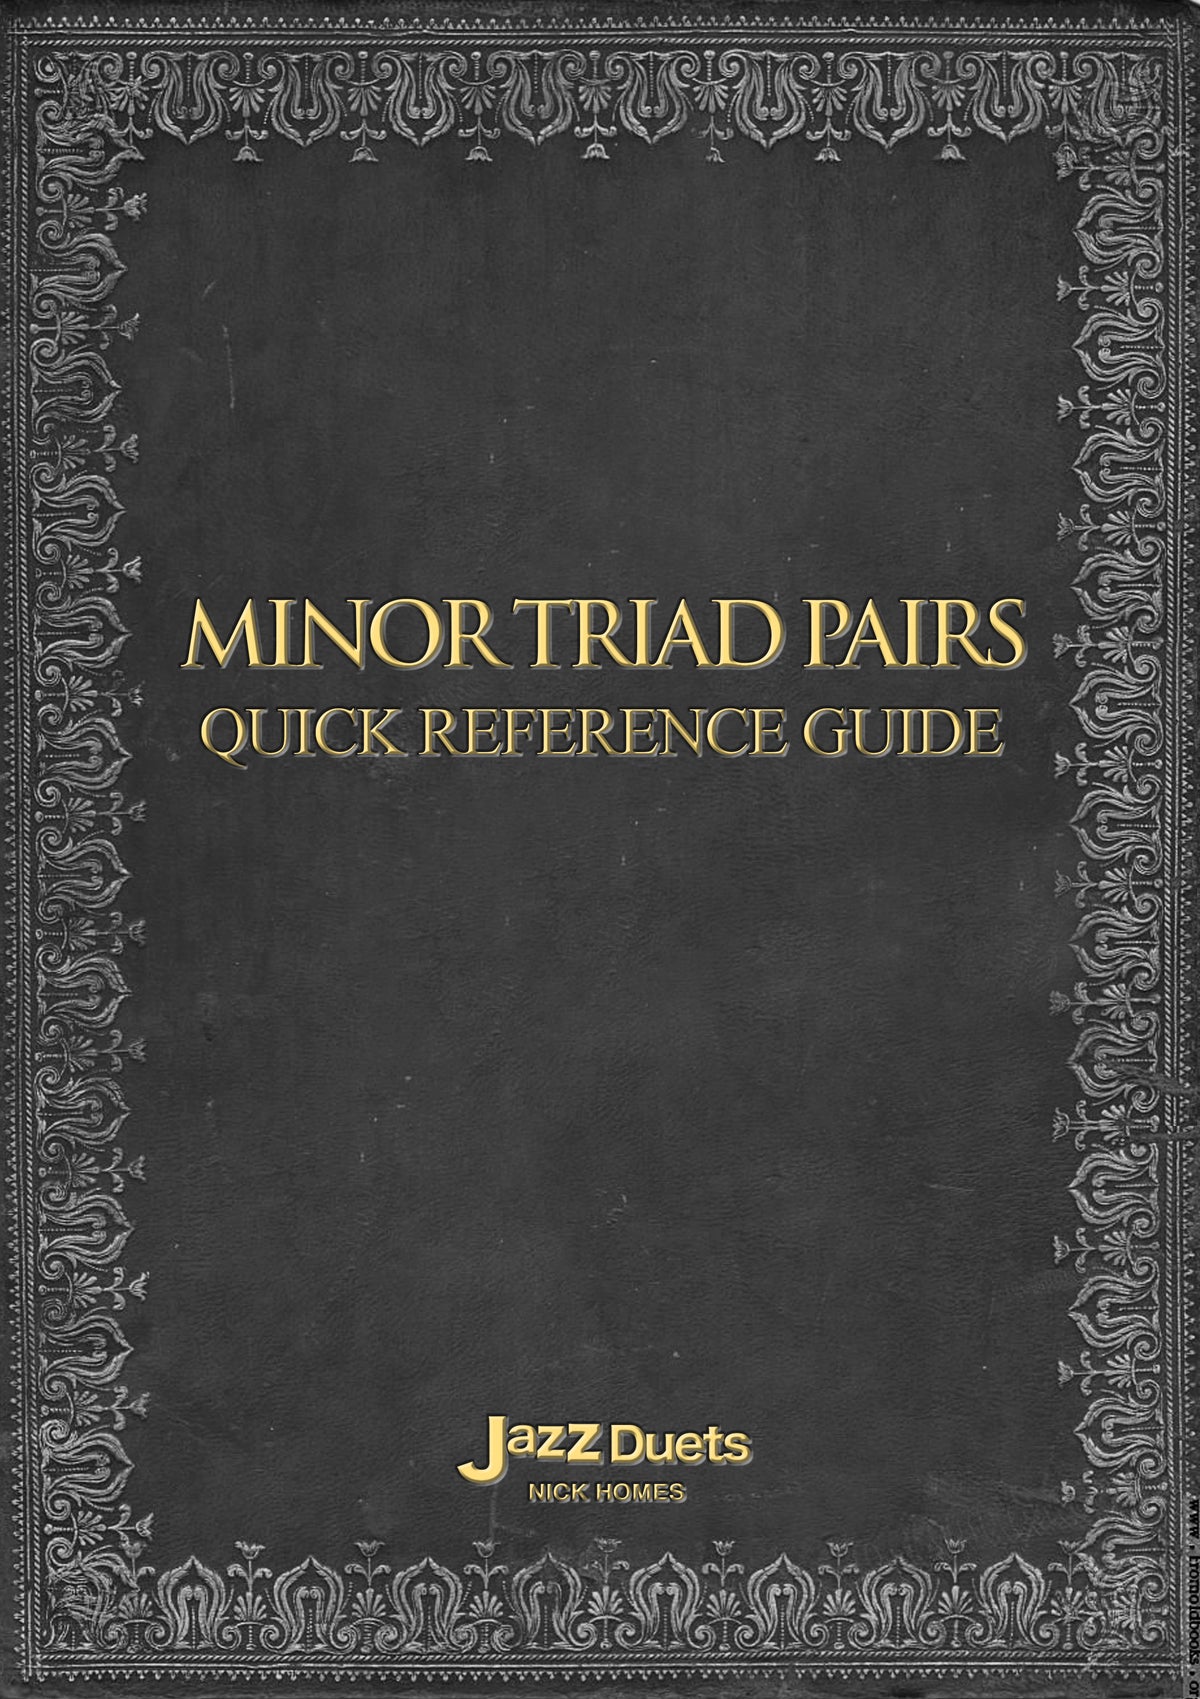 Thesaurus of Minor Triad Pairs Pdf+mp3 lighter version